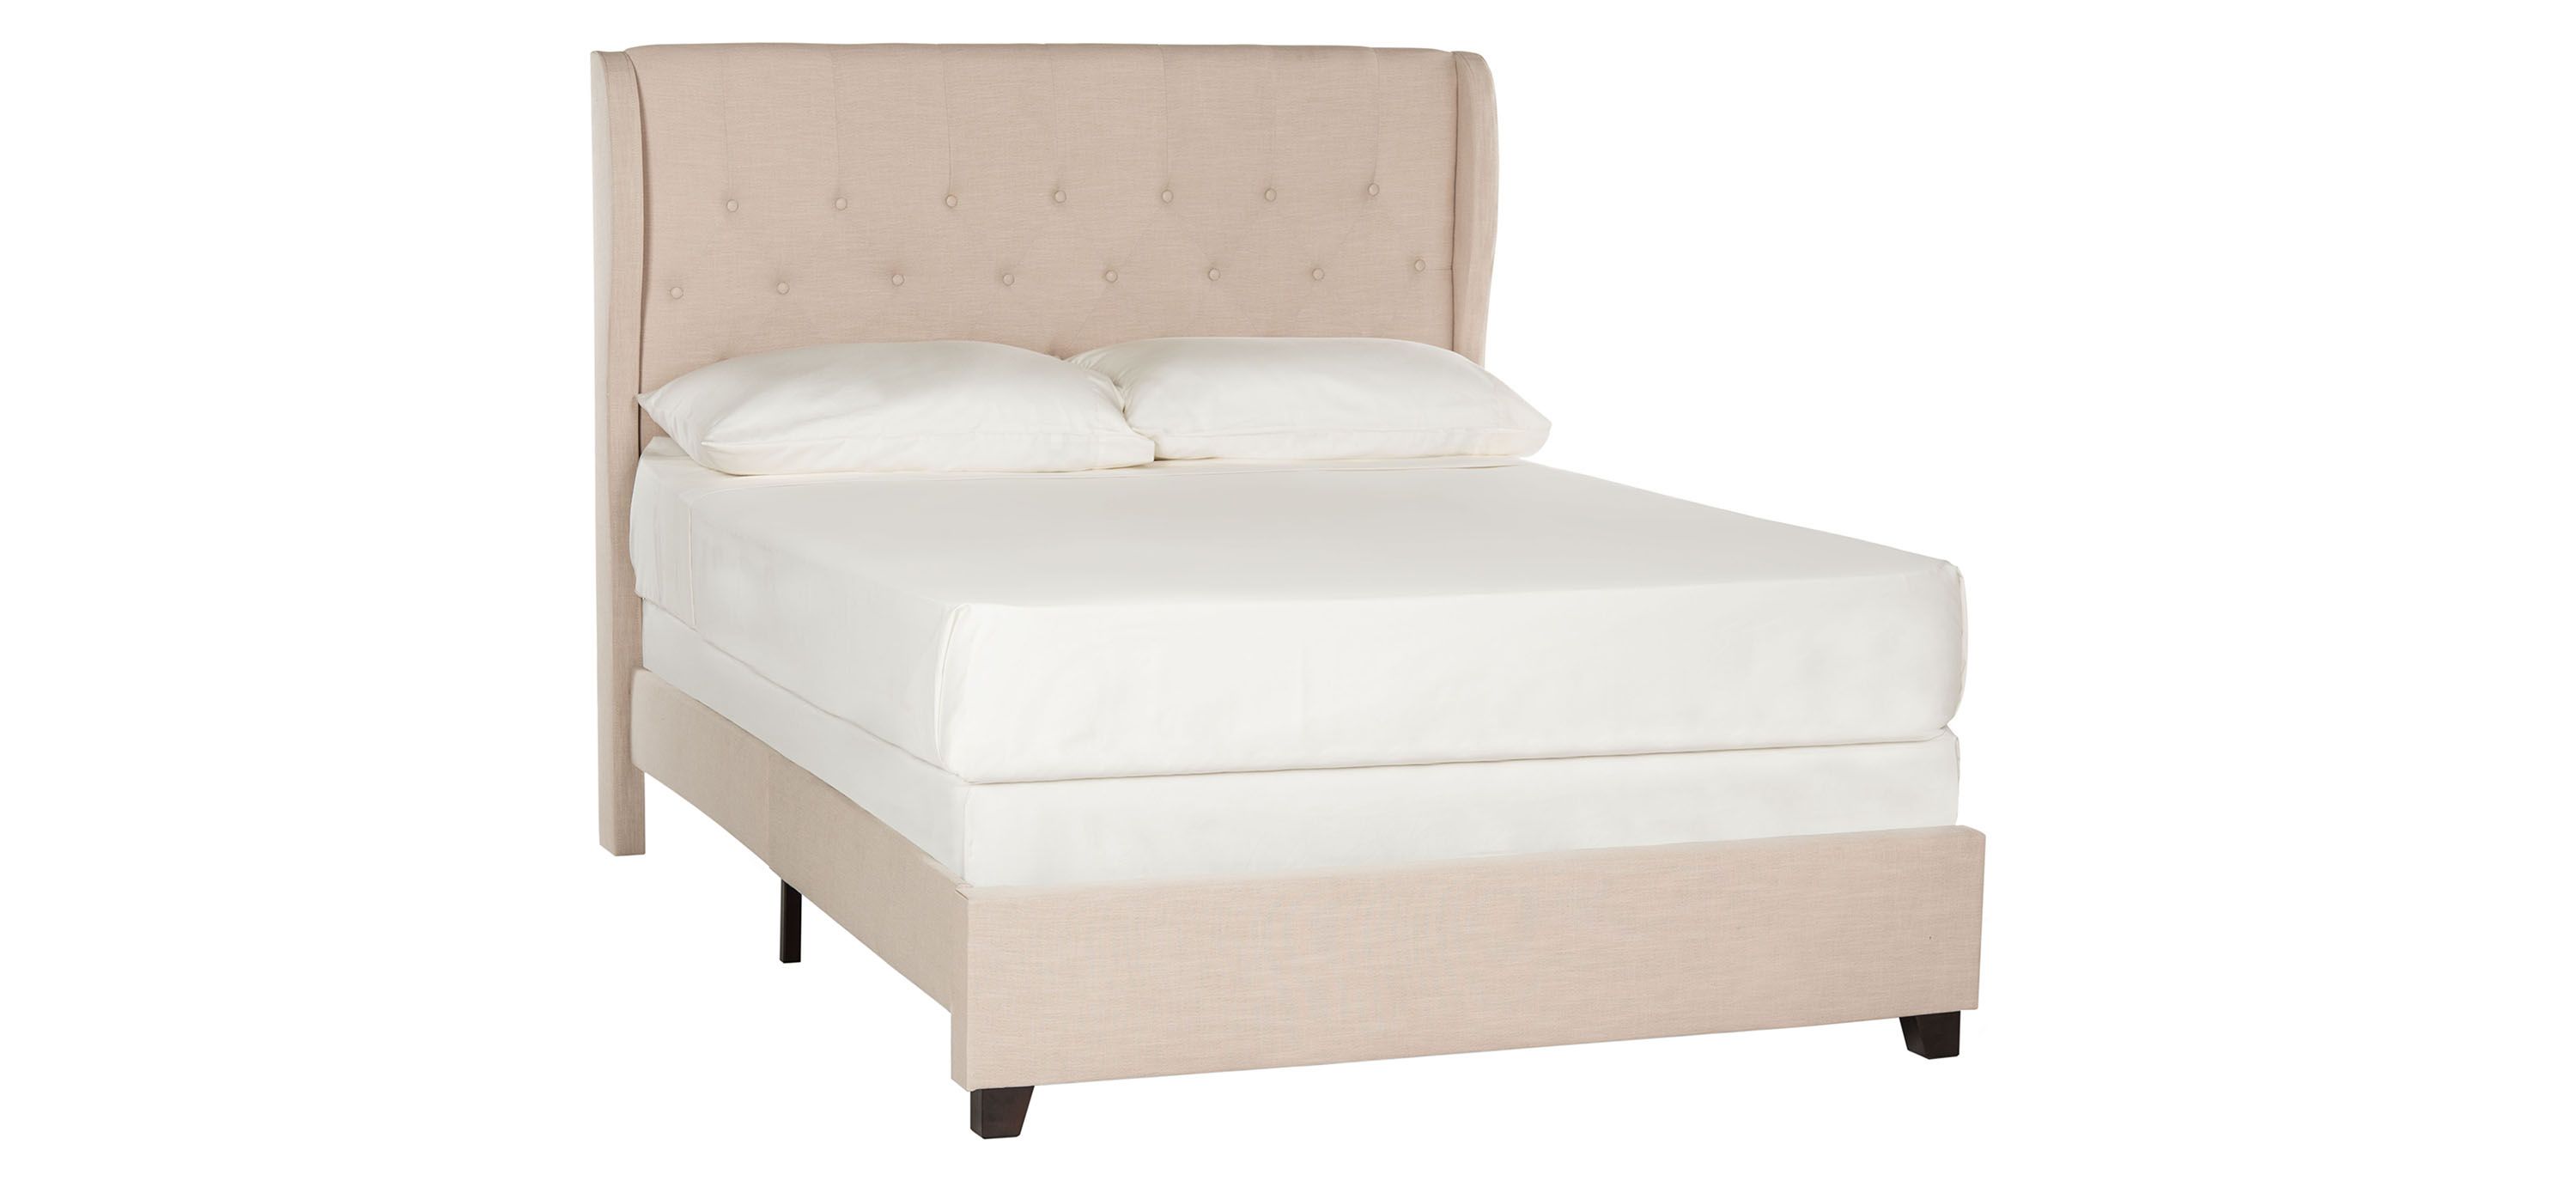 Blanchett Upholstered Queen Bed